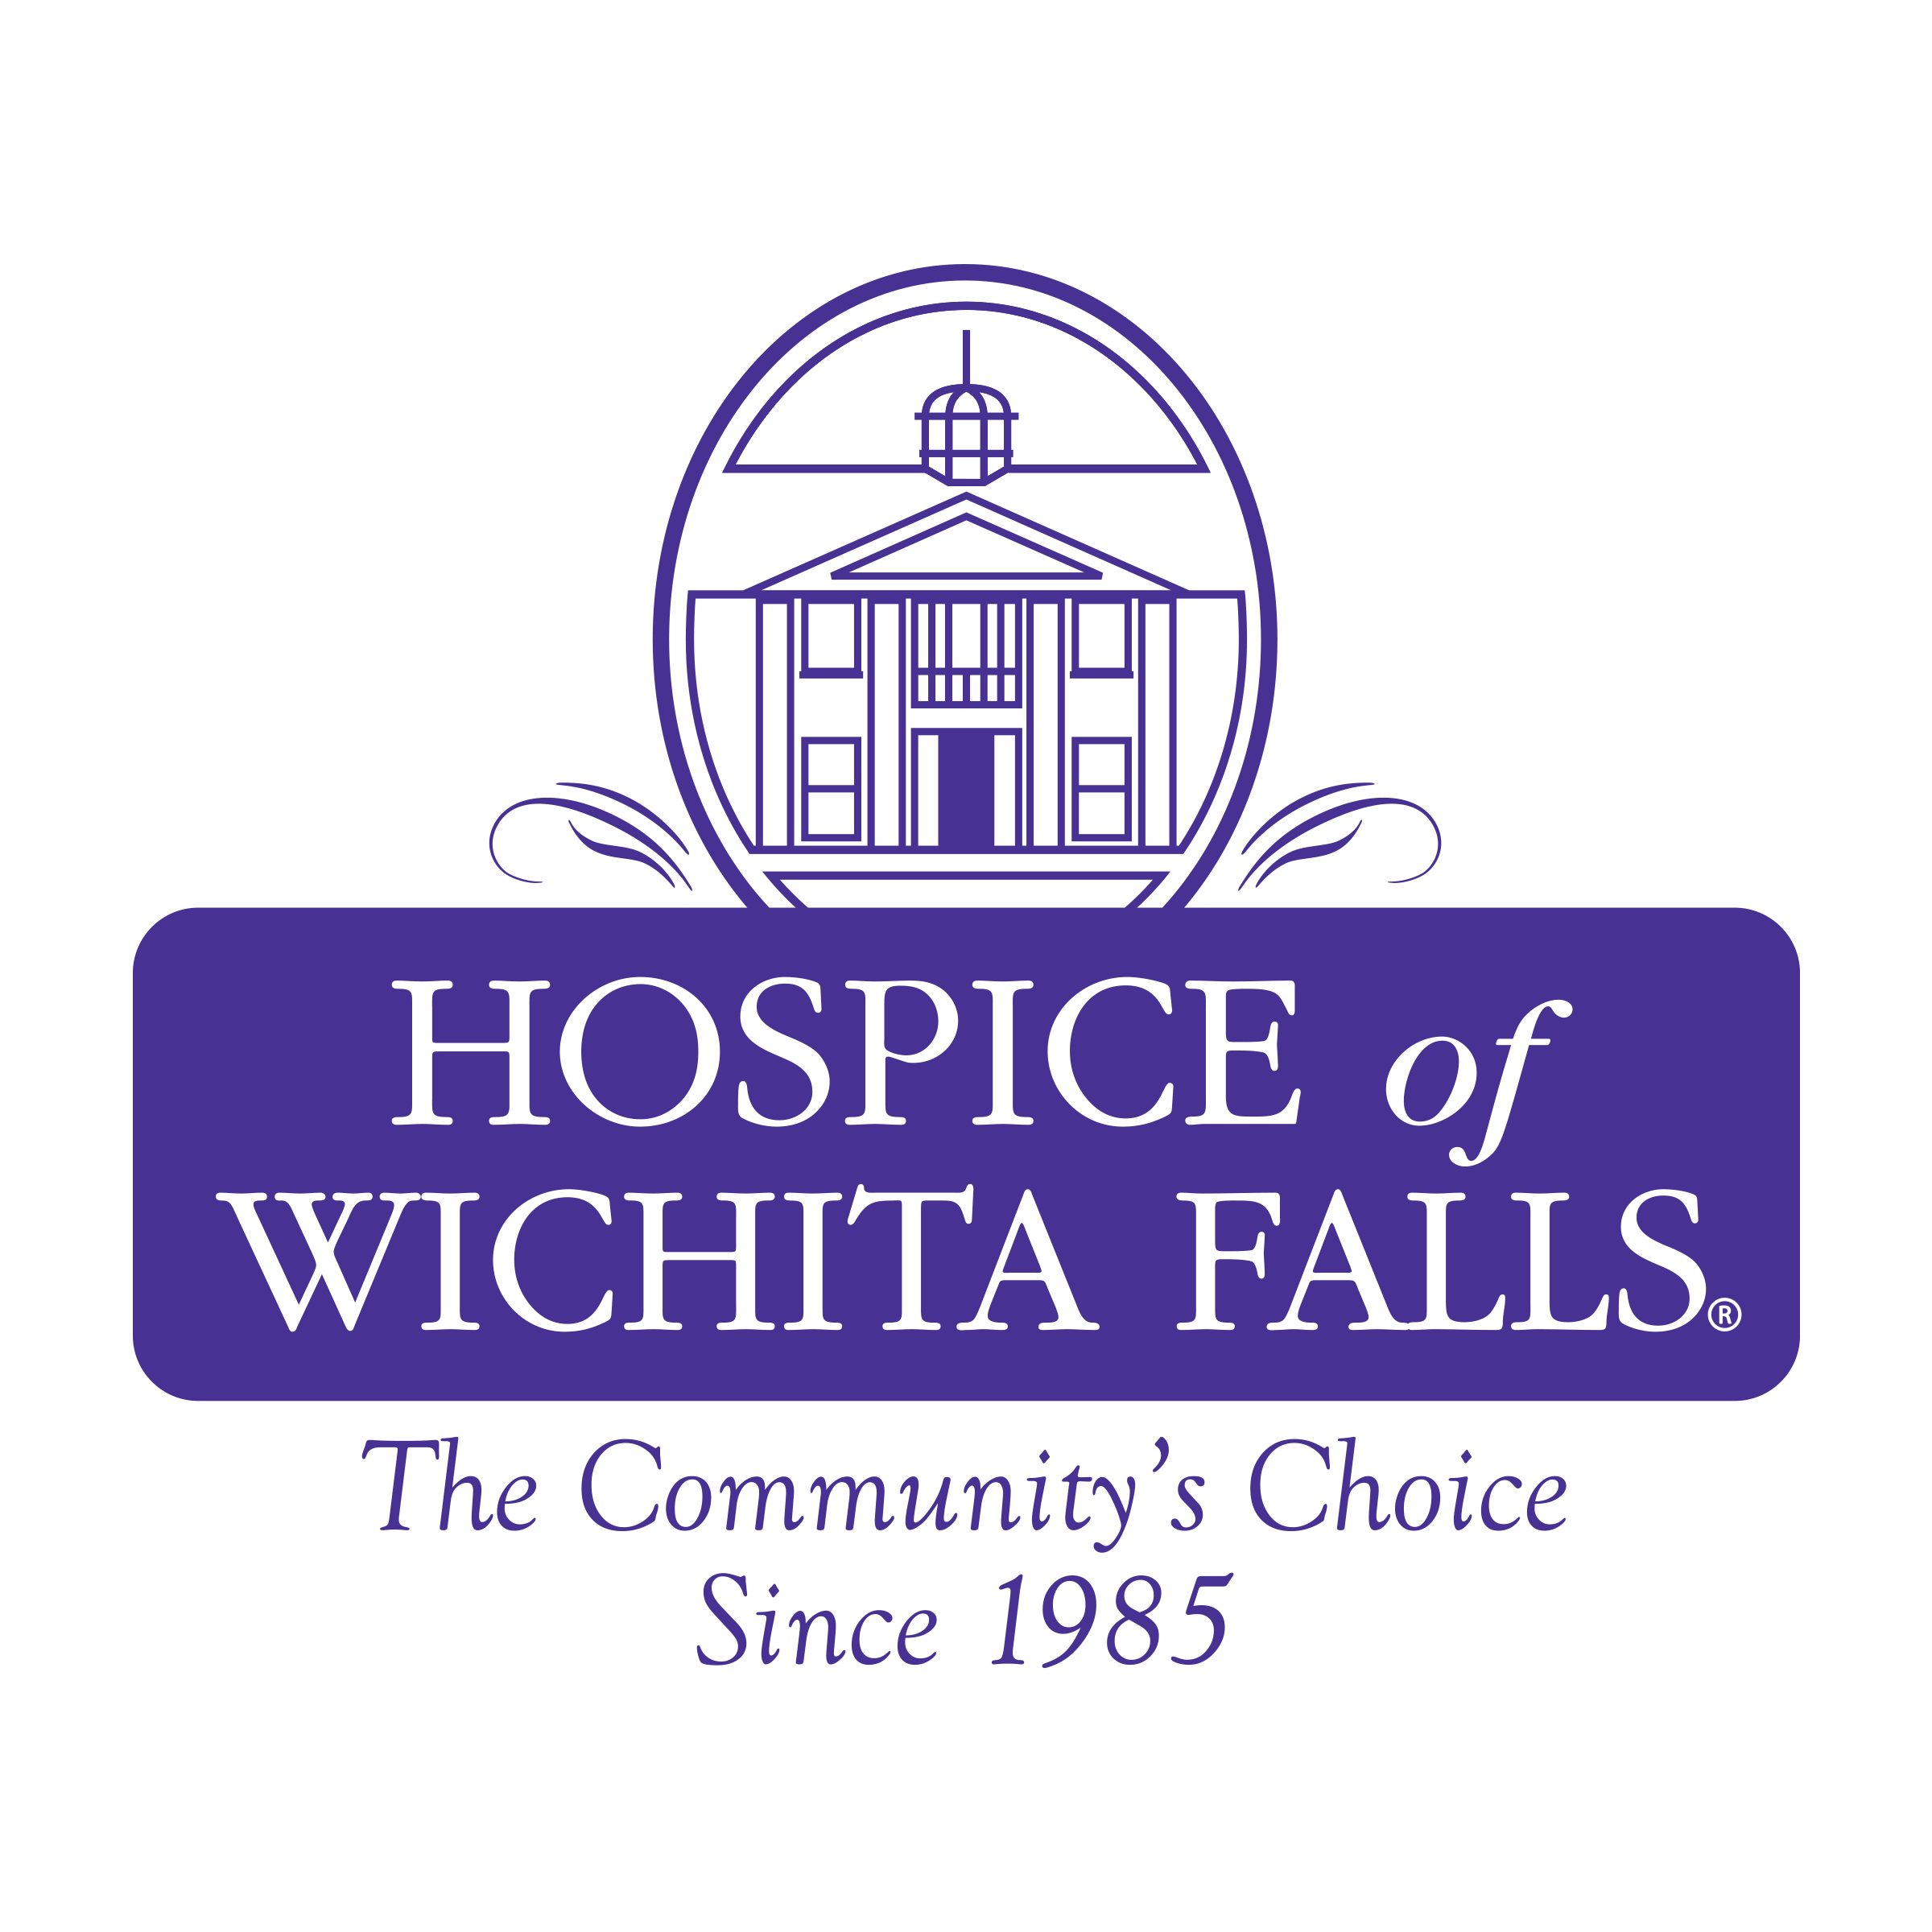 Hospice of Wichita Falls